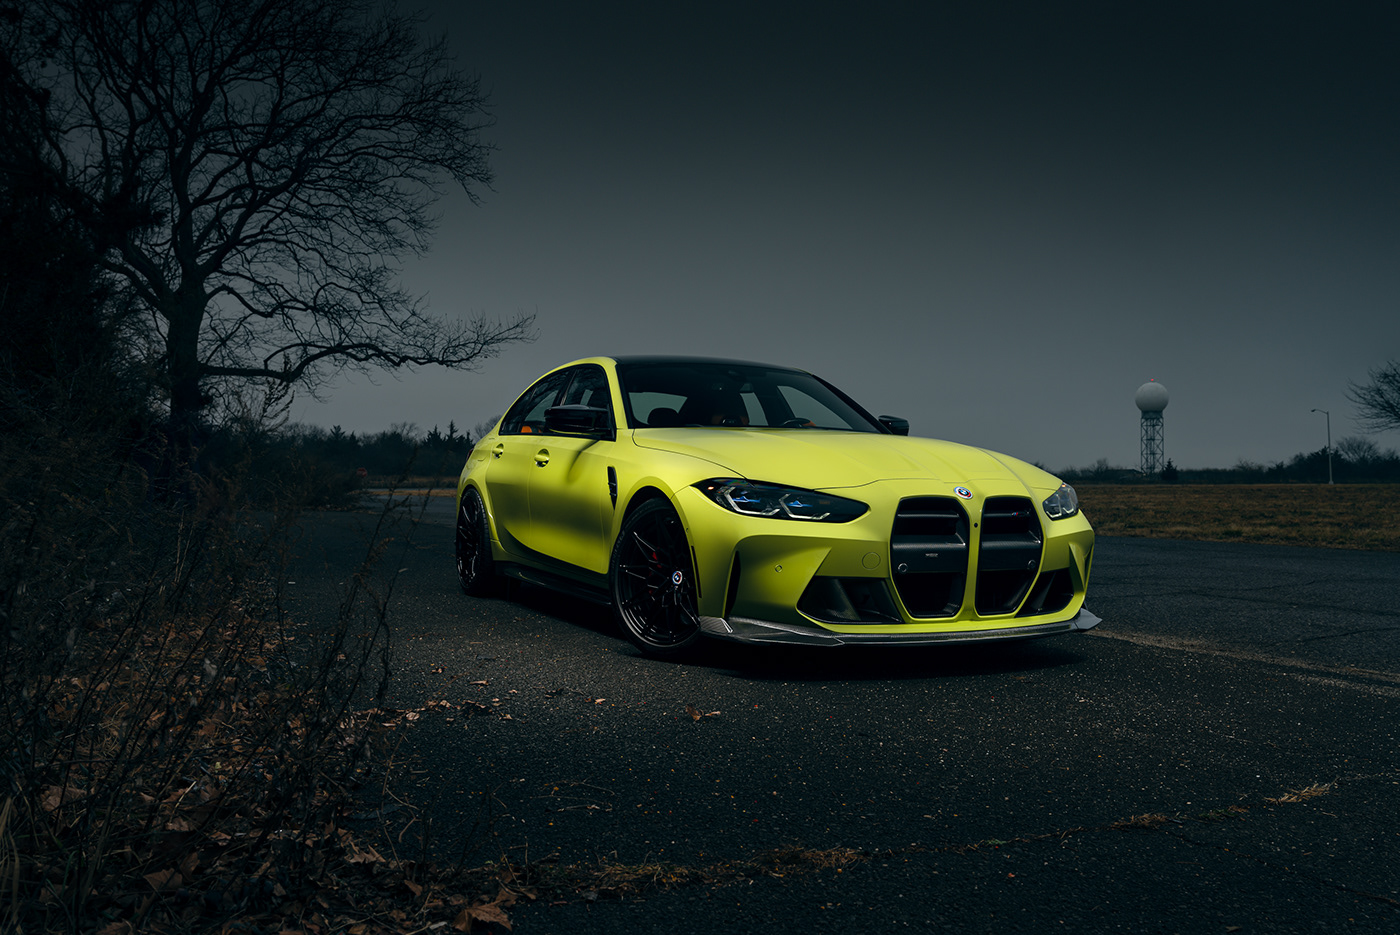 BMW bmw m BMW M3 automotive   car design industrial car photography Cars Advertising  Social media post